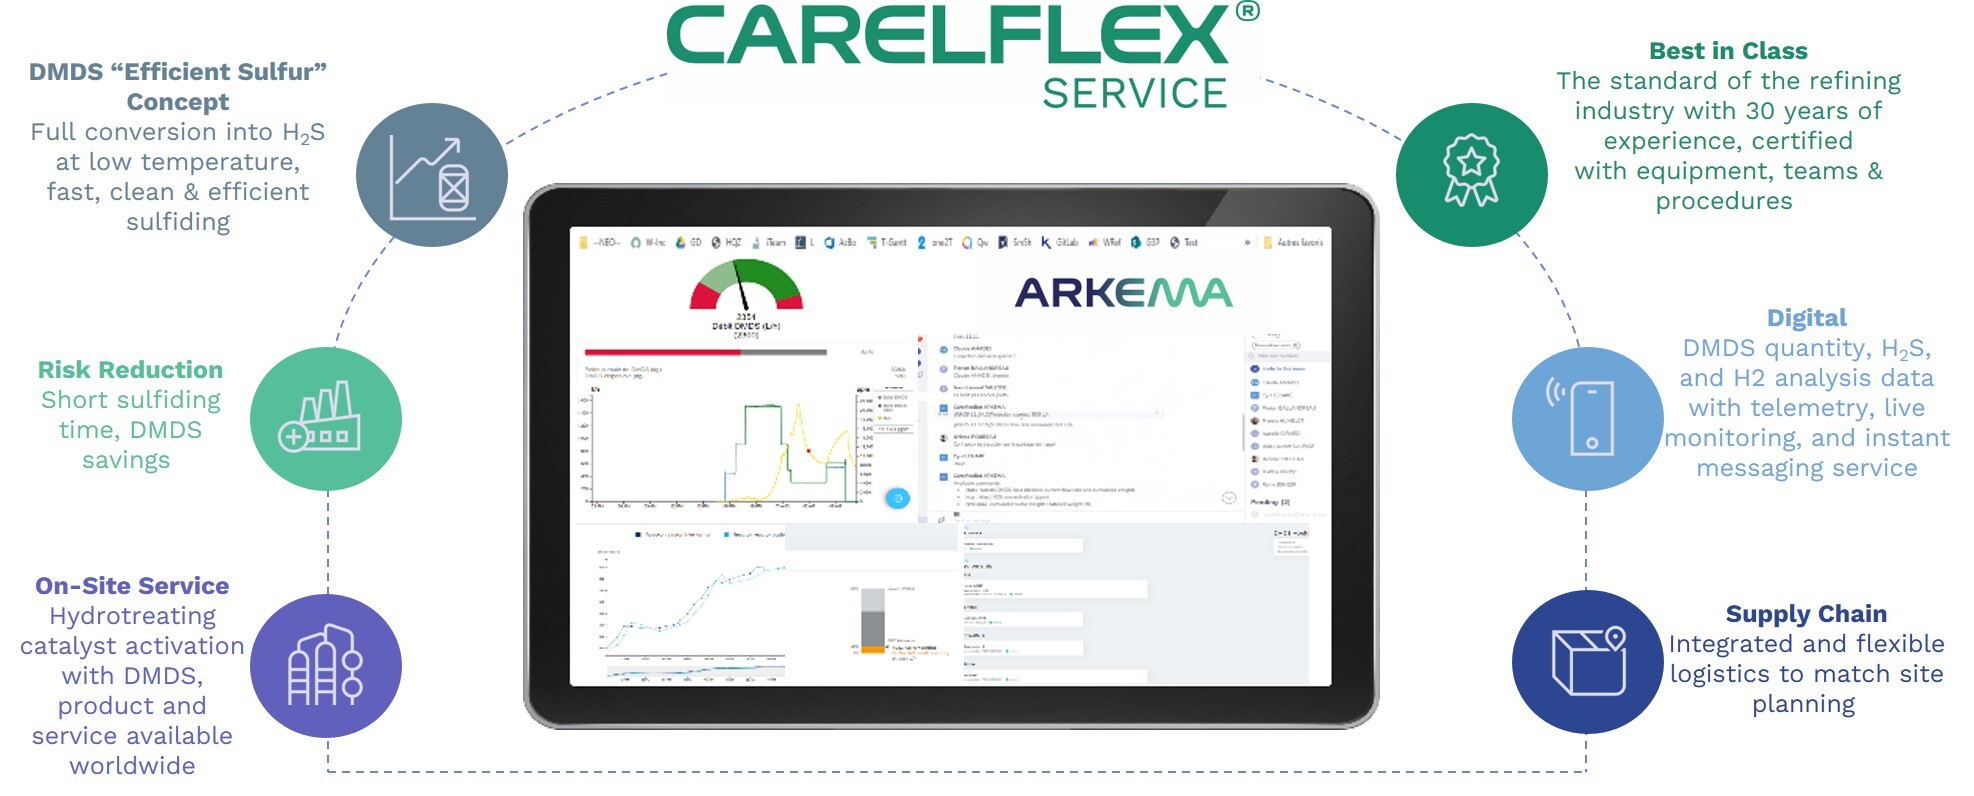 Carelflex Service scheme explaining how to use Carelflex for your Sulfiding